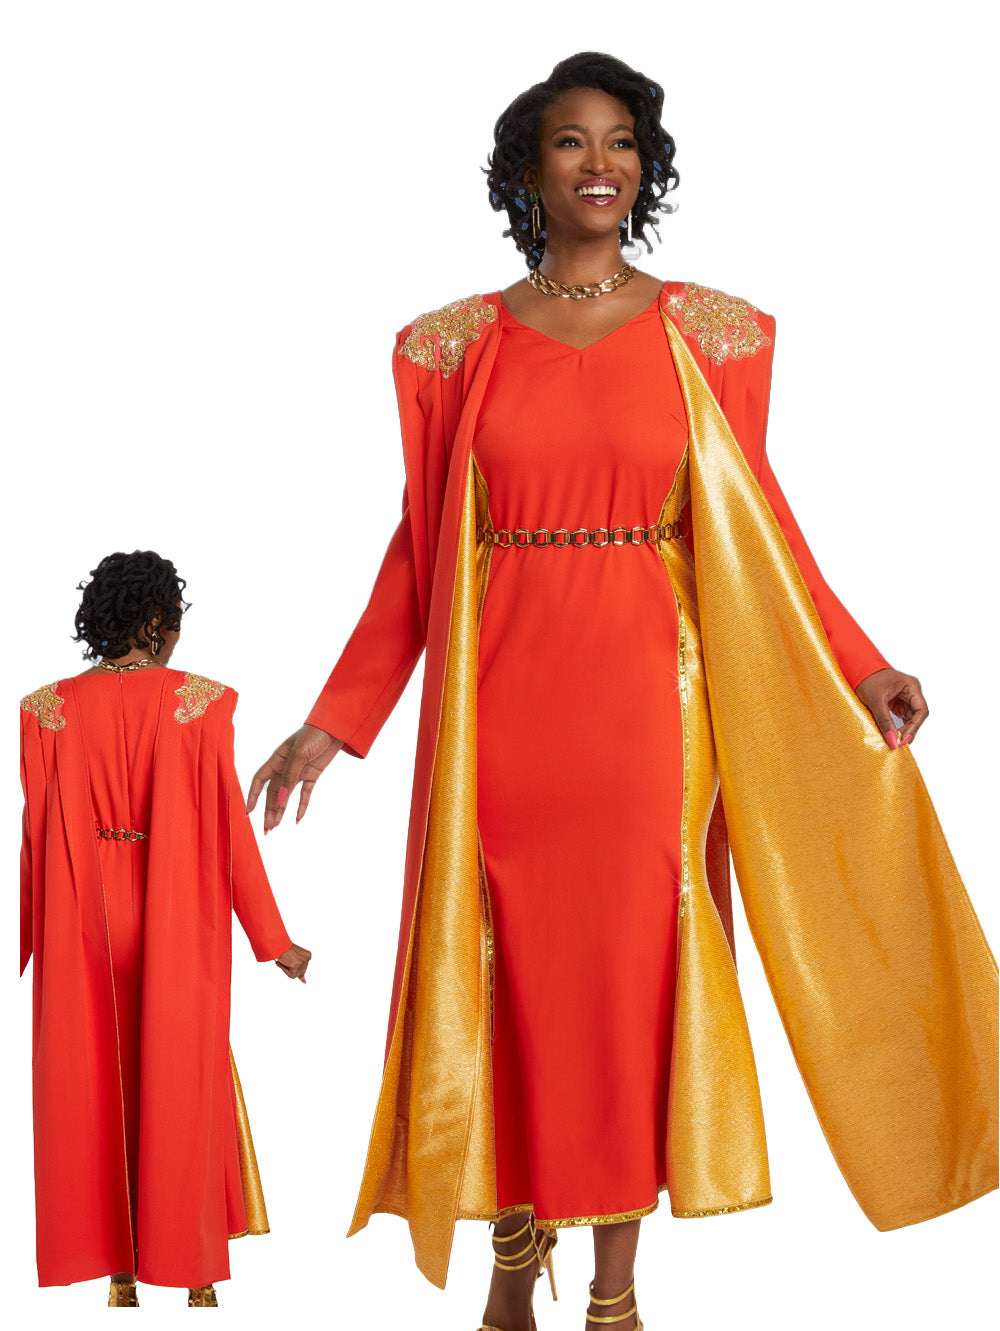 Donna Vinci Church Dress 5816 - Church Suits For Less